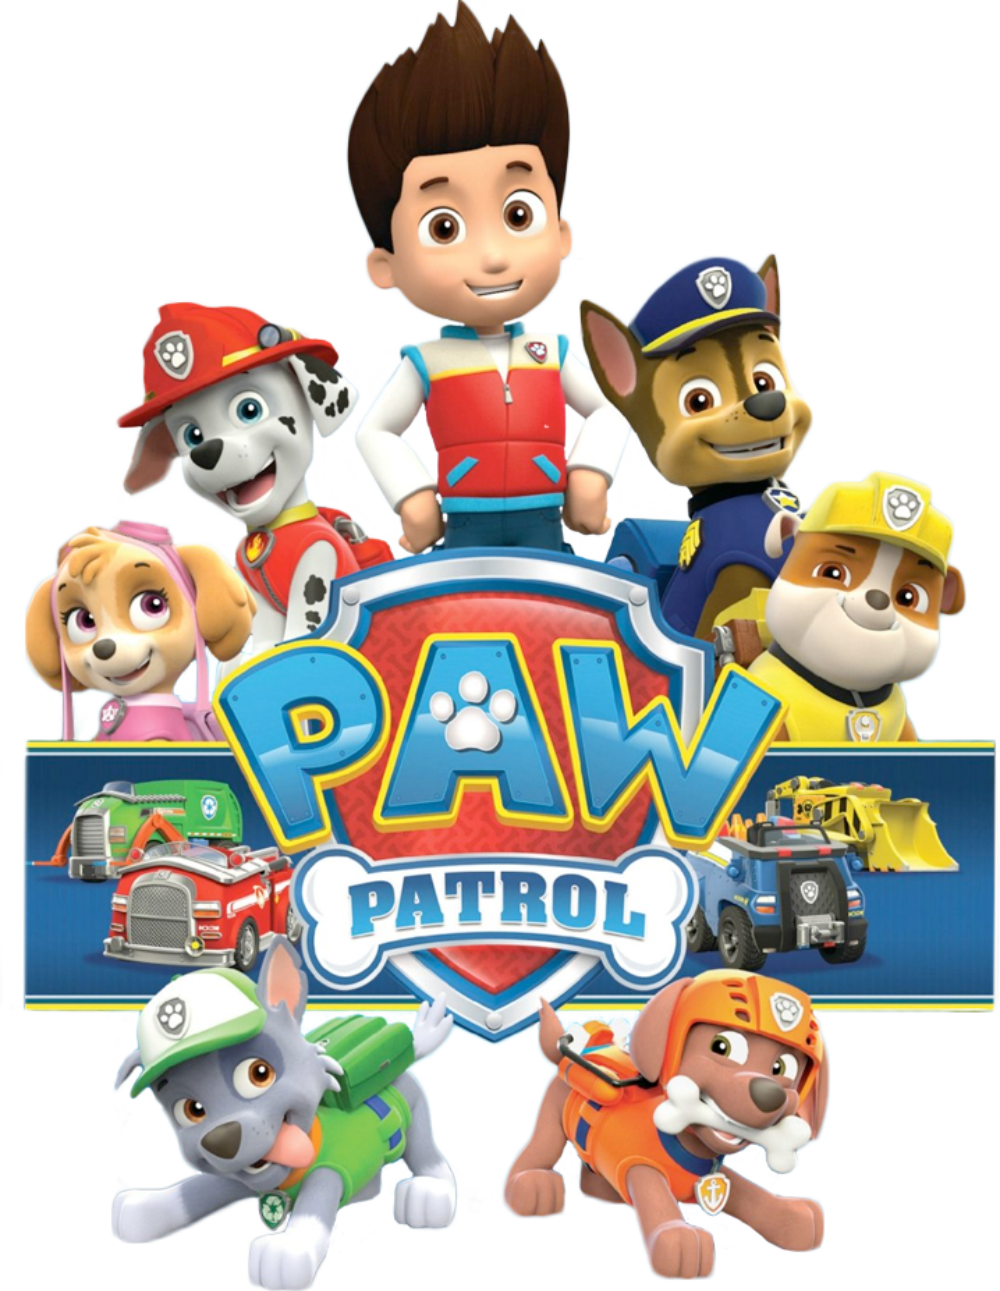 Patrol Dog Paw Free HD Image Clipart